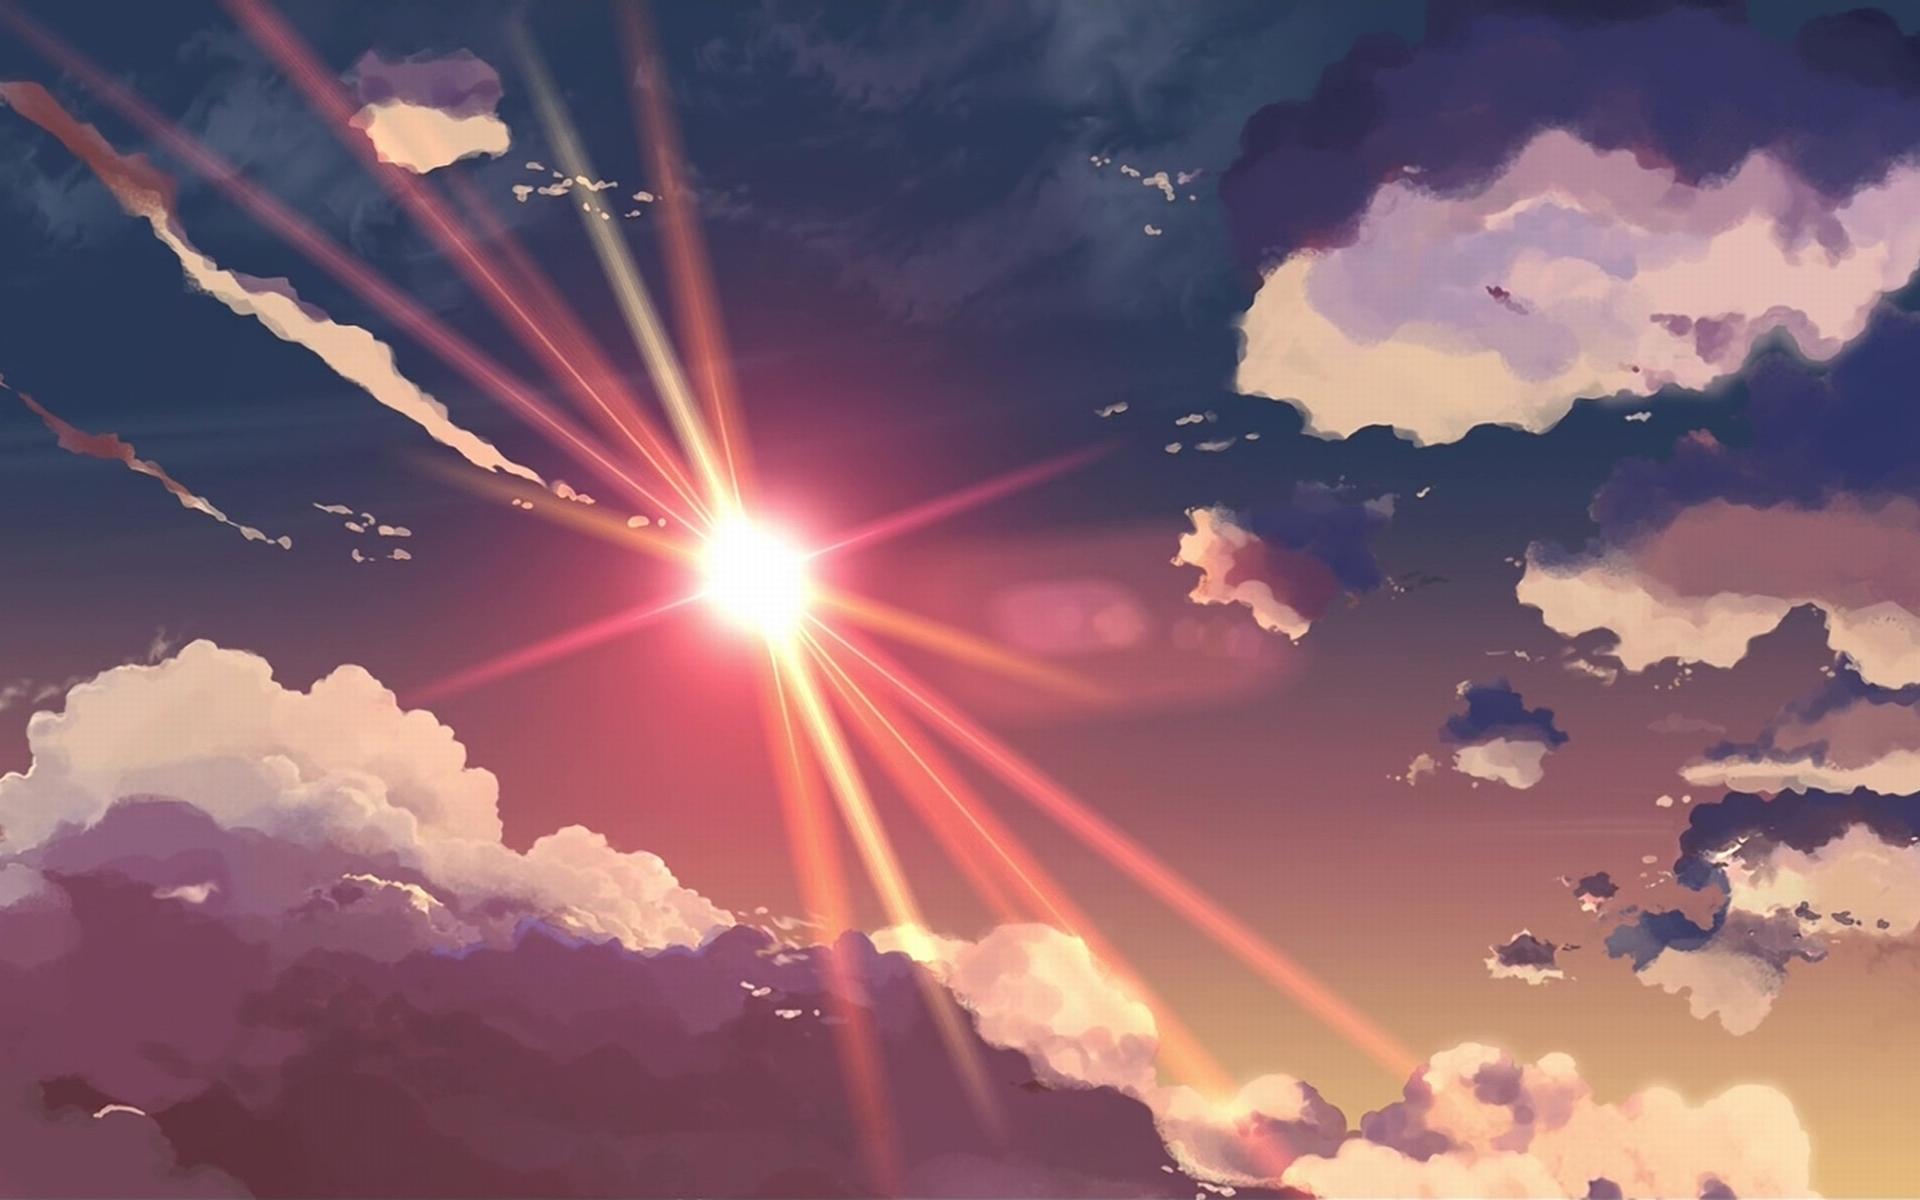 Anime sunset wallpaper 1920x - Sunshine, sun, sunlight